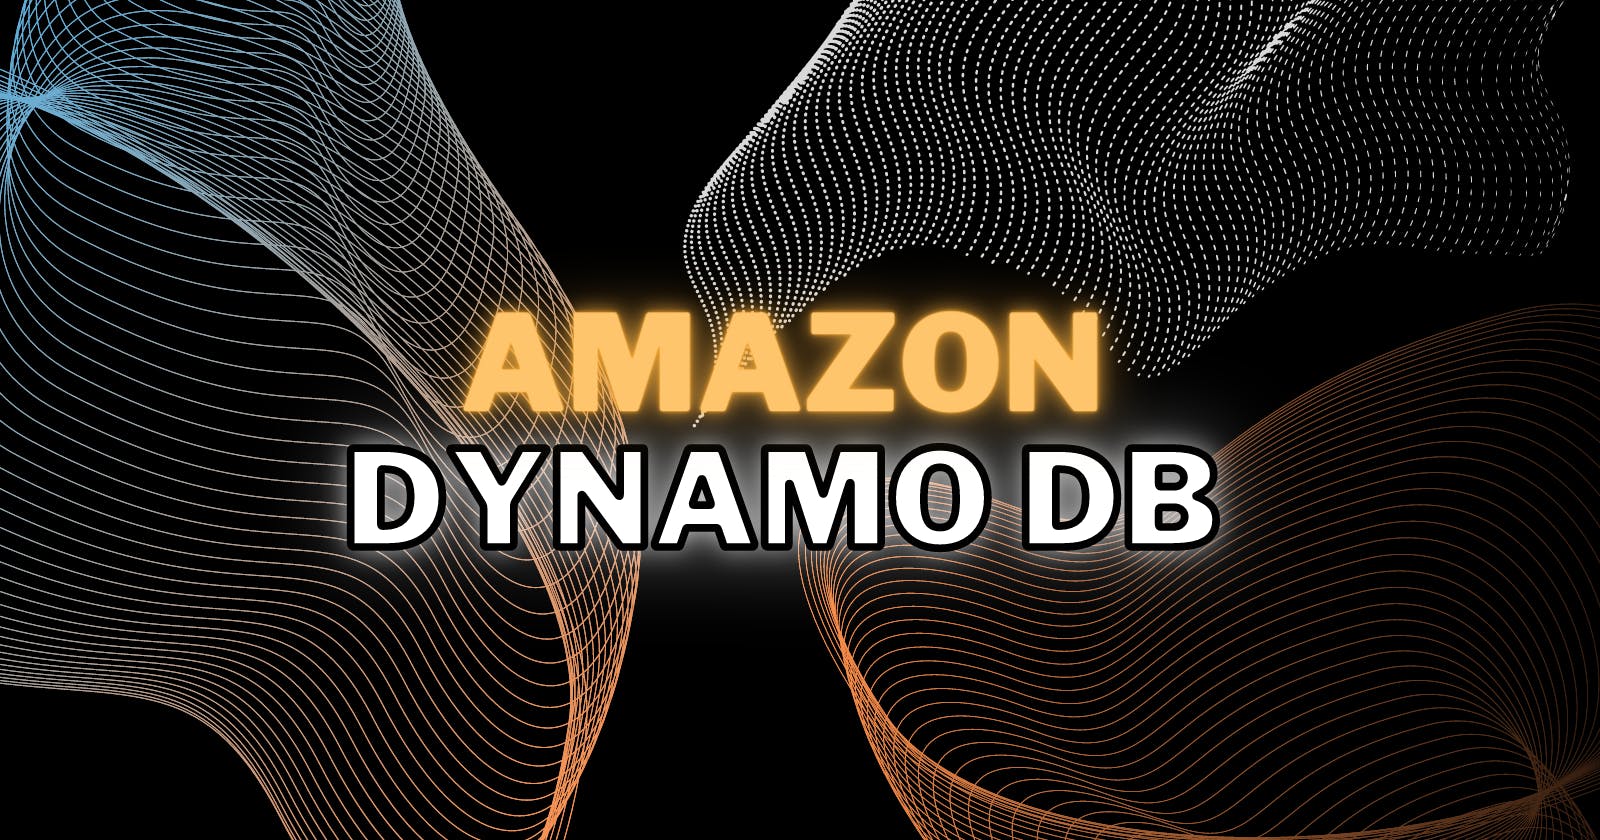 Amazon DynamoDB